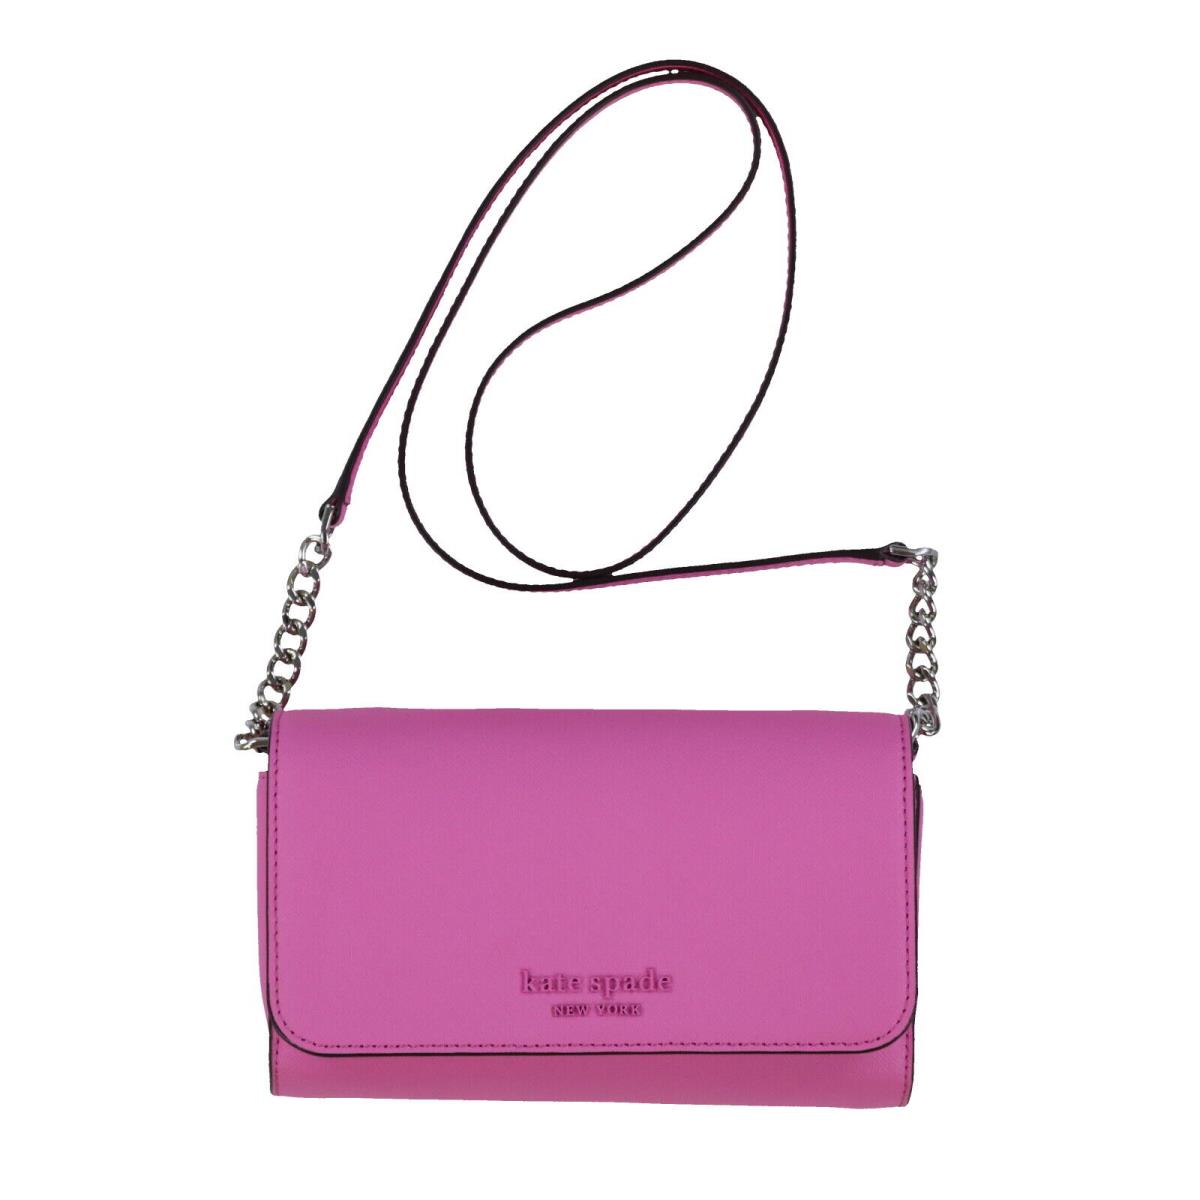 Kate Spade New York Cameron Crossbody Purse Bag Small Flap Leather Handbag New Bright Peony Pink